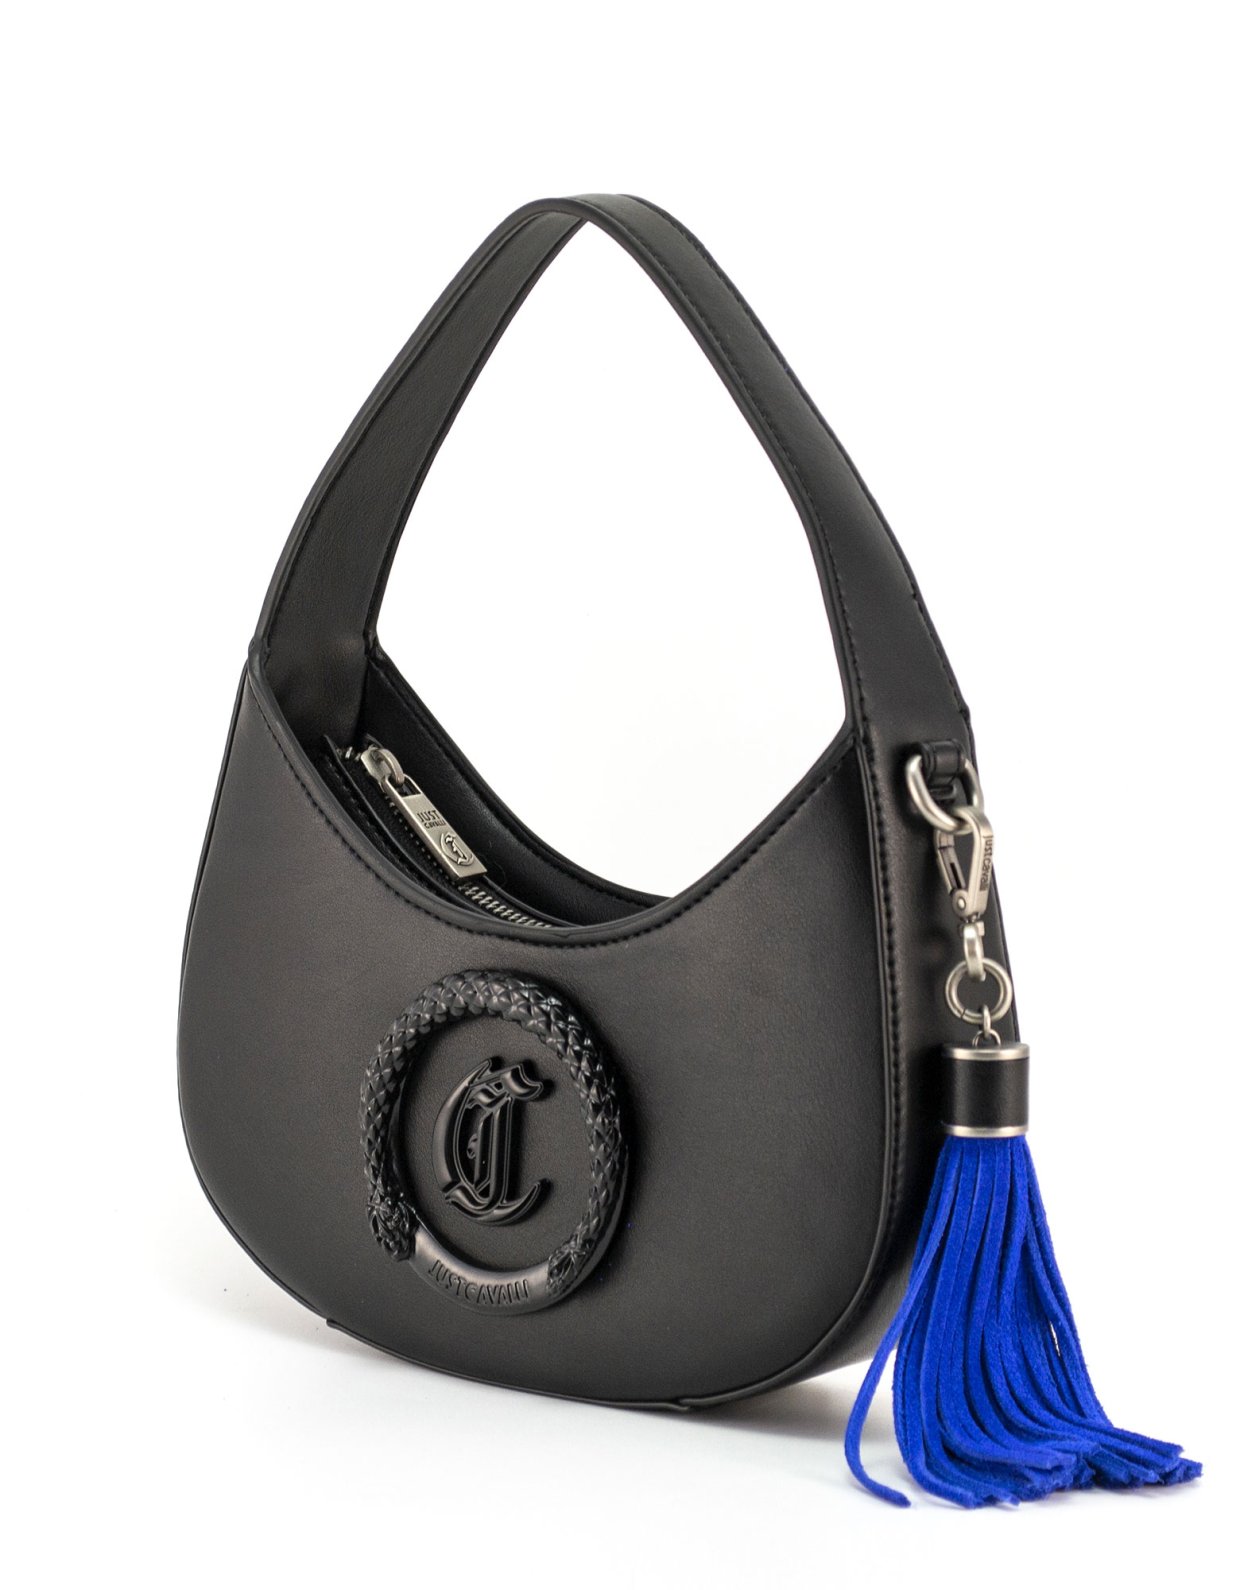 Just Cavalli Range new metal circle shoulder bag black